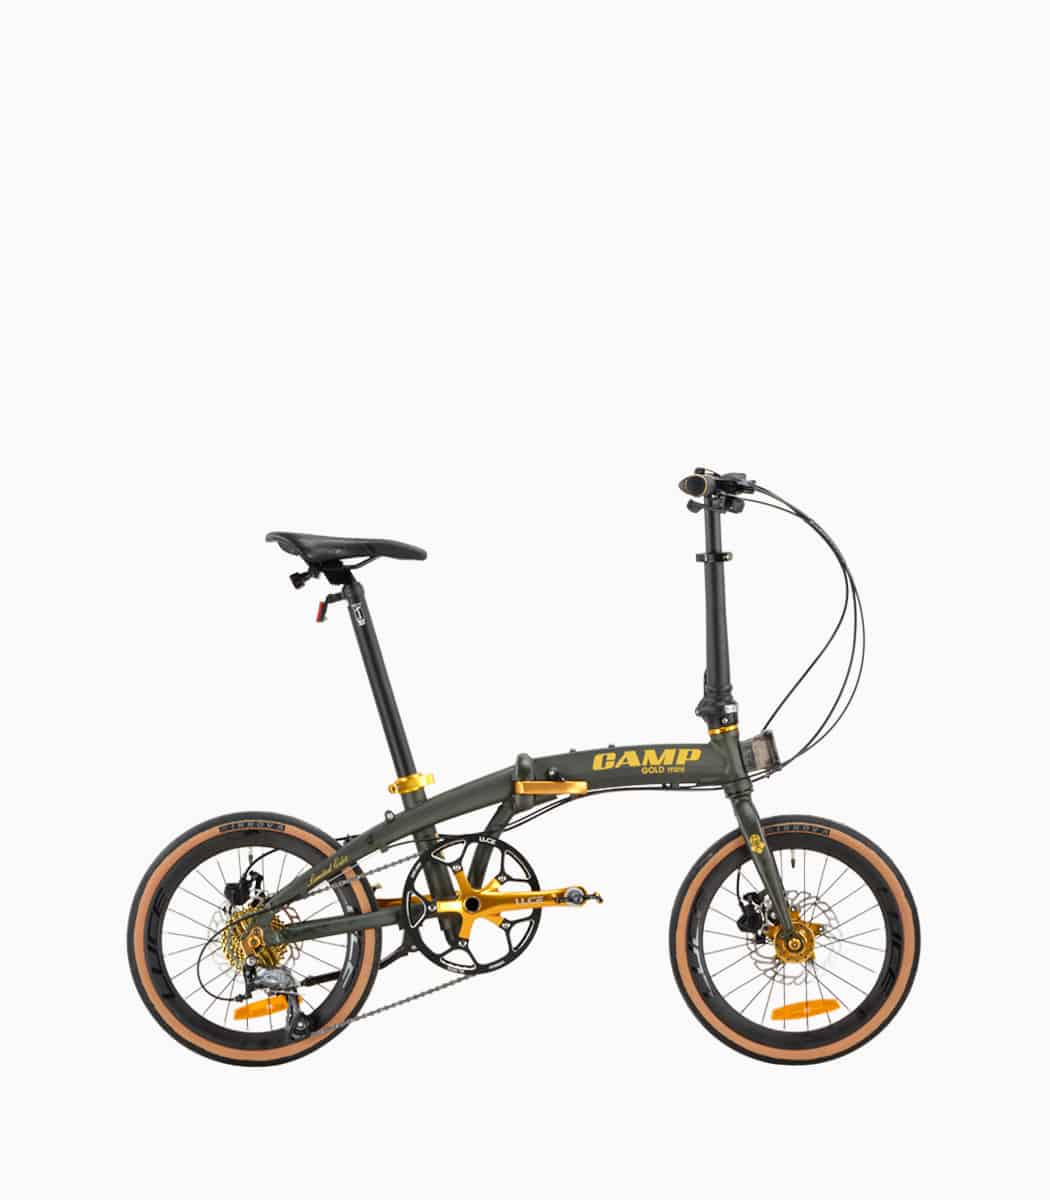 CAMP GOLD Mini (MATT GREY) foldable bicycle right